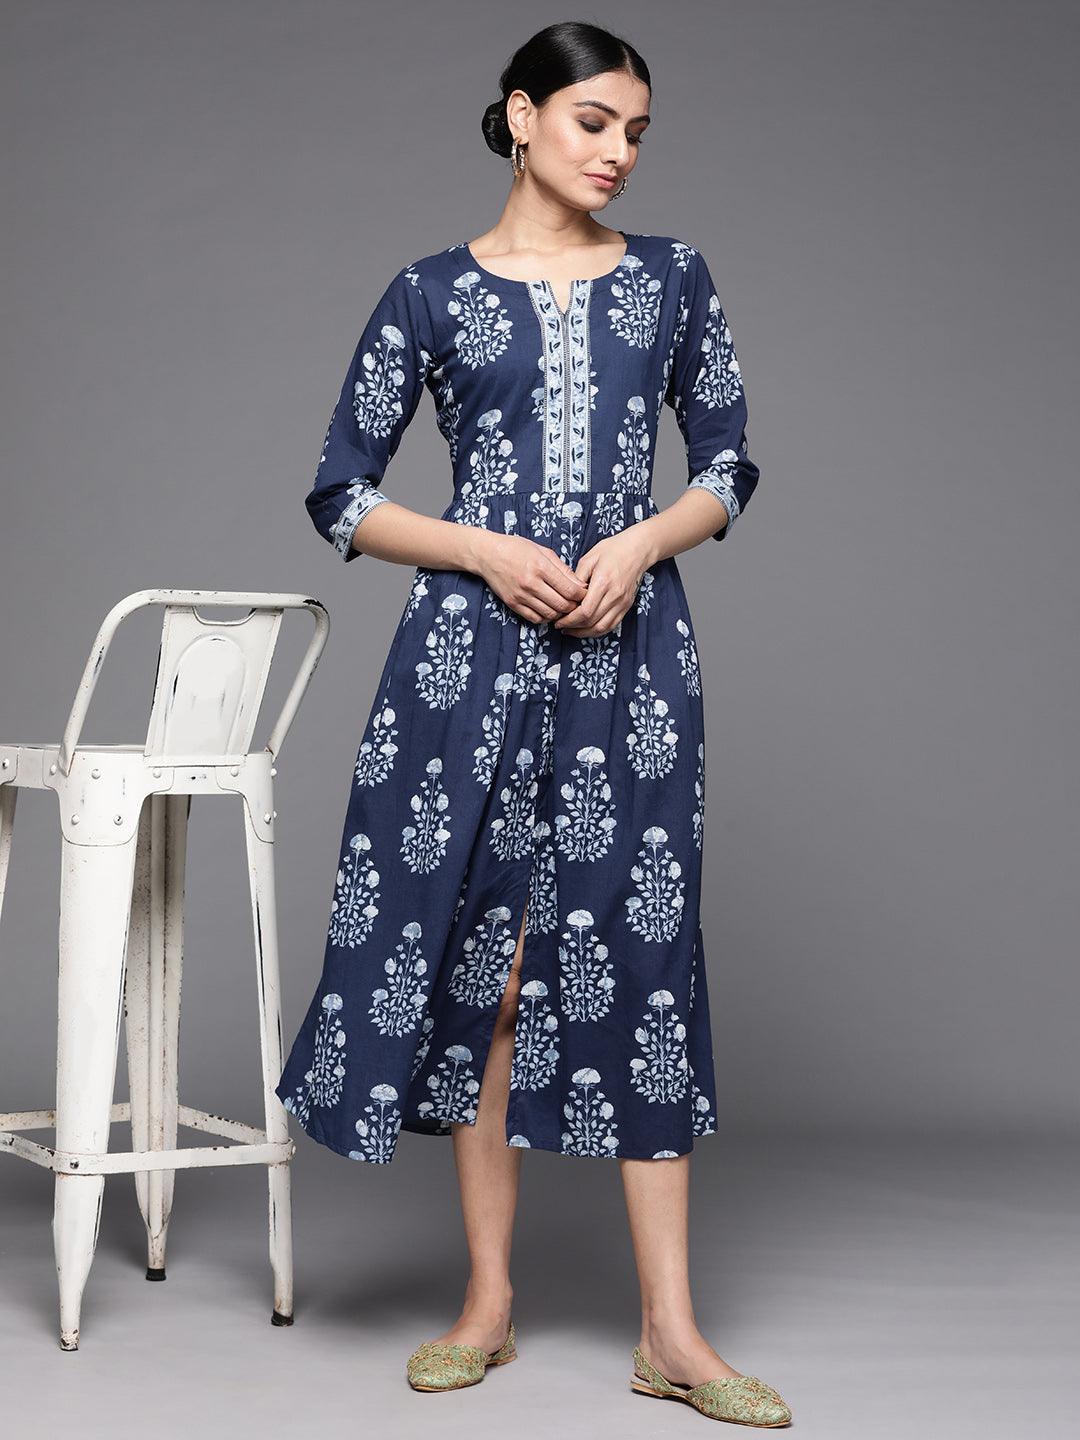 Navy Blue Printed Cotton Dress - Libas